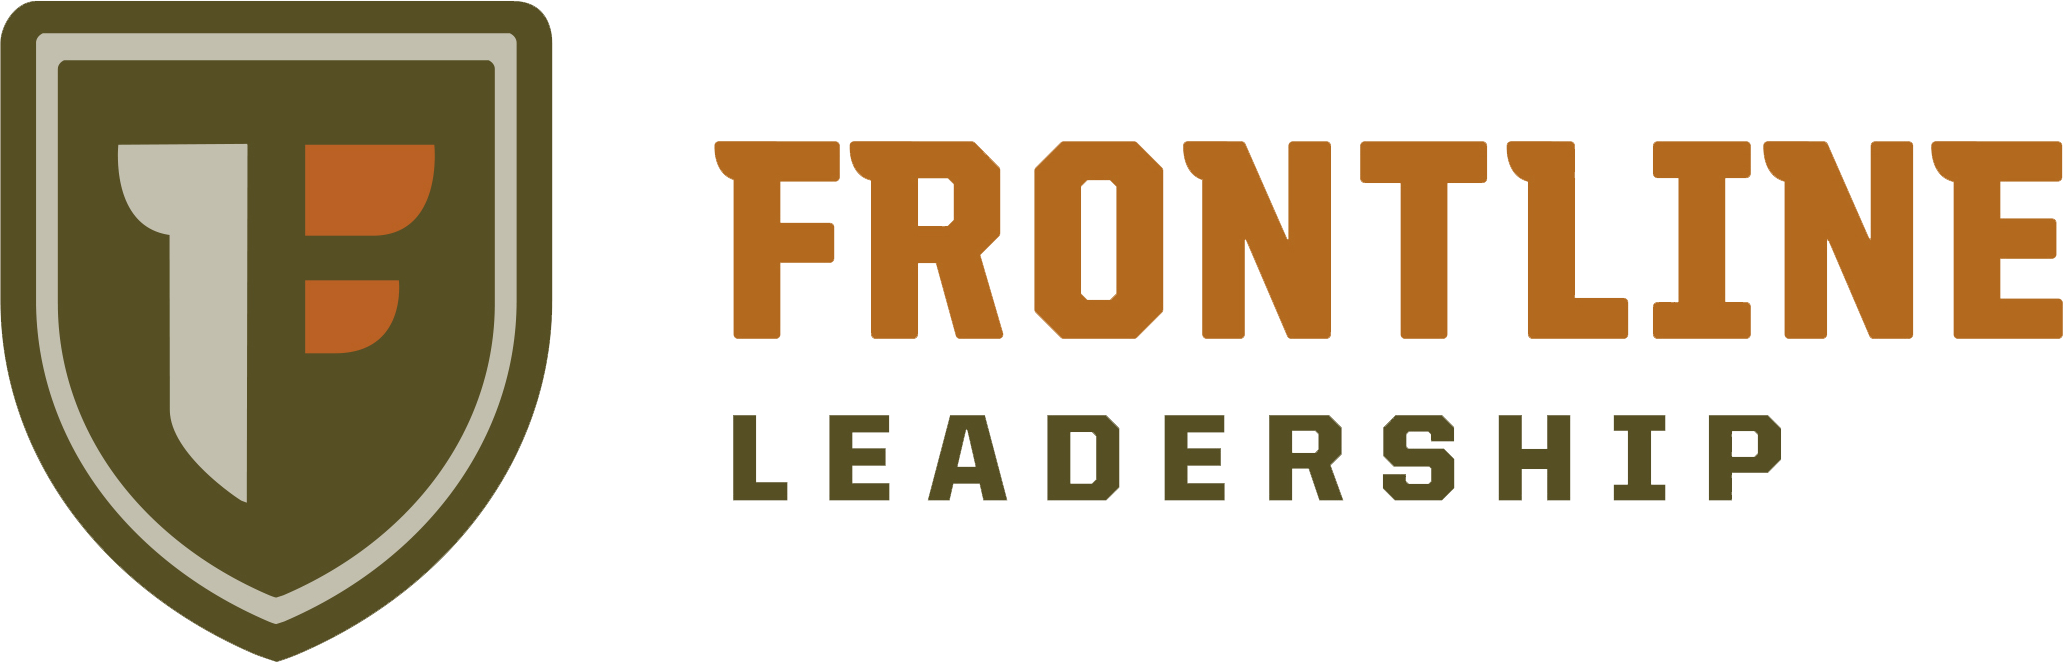 Frontline Leadership Logo